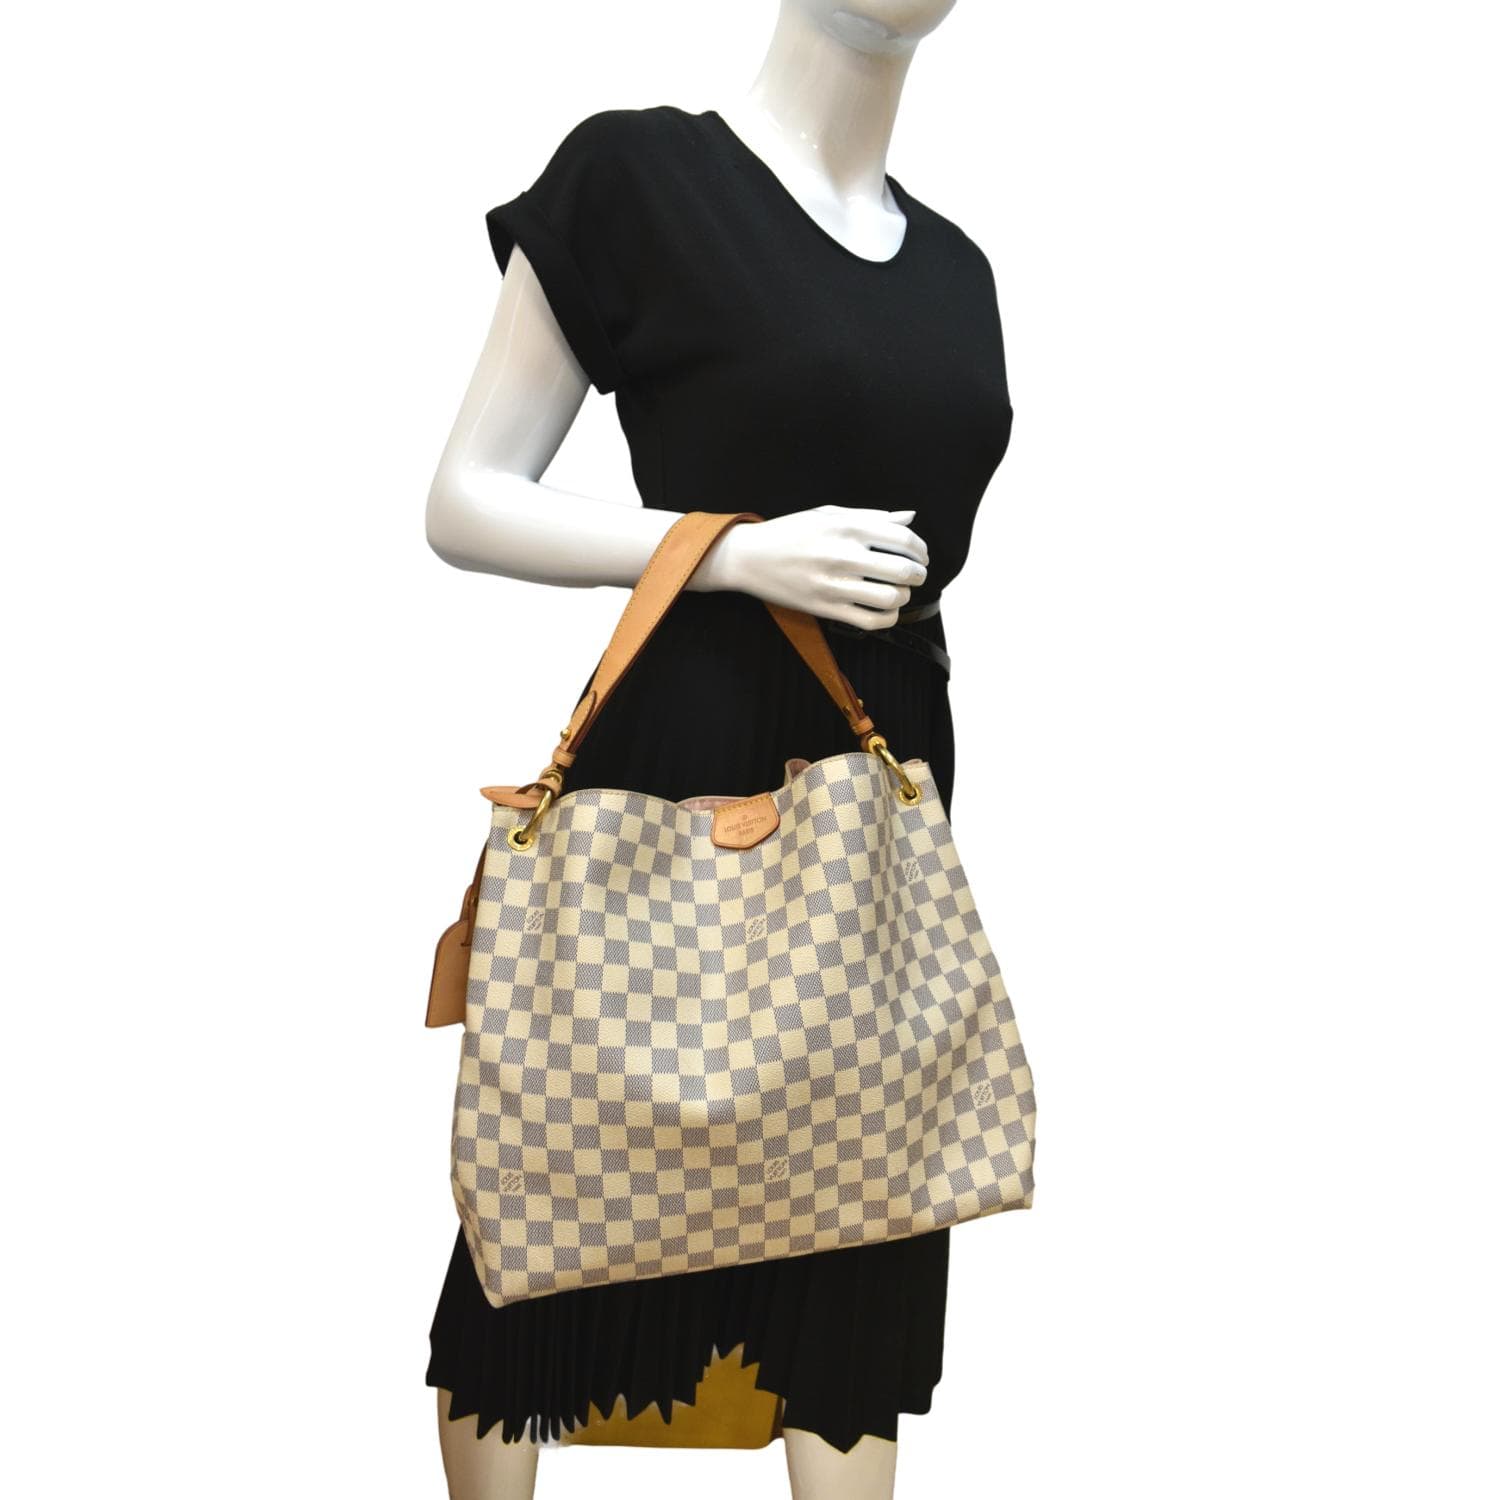 Louis Vuitton Damier Azur Graceful Handbag